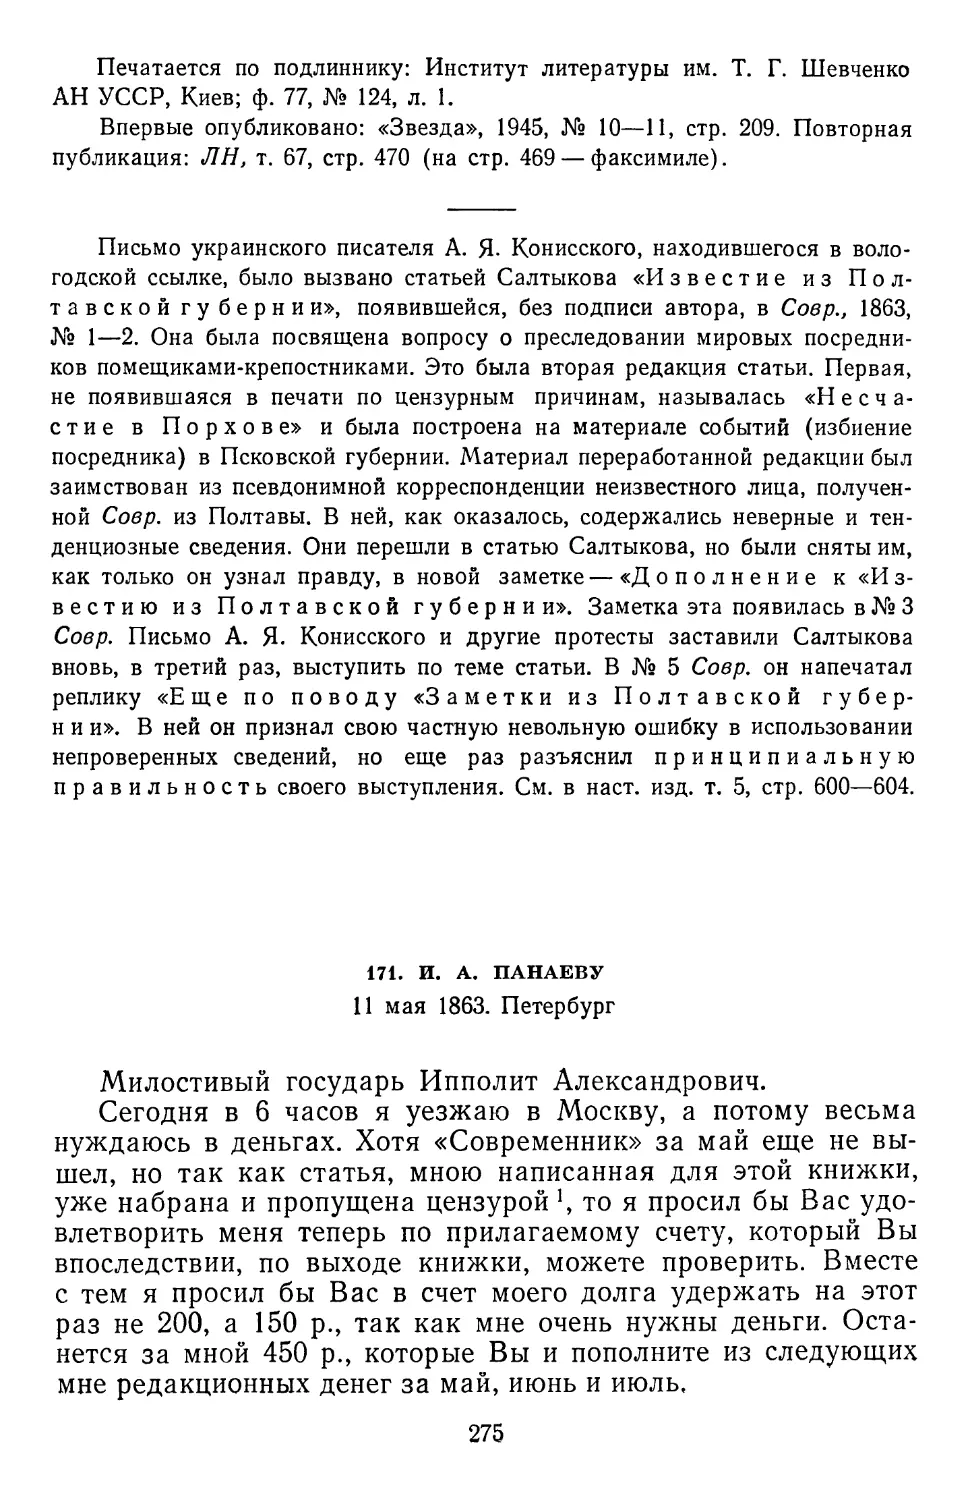 171.И. А.Панаеву. 11 мая 1863. Петербург